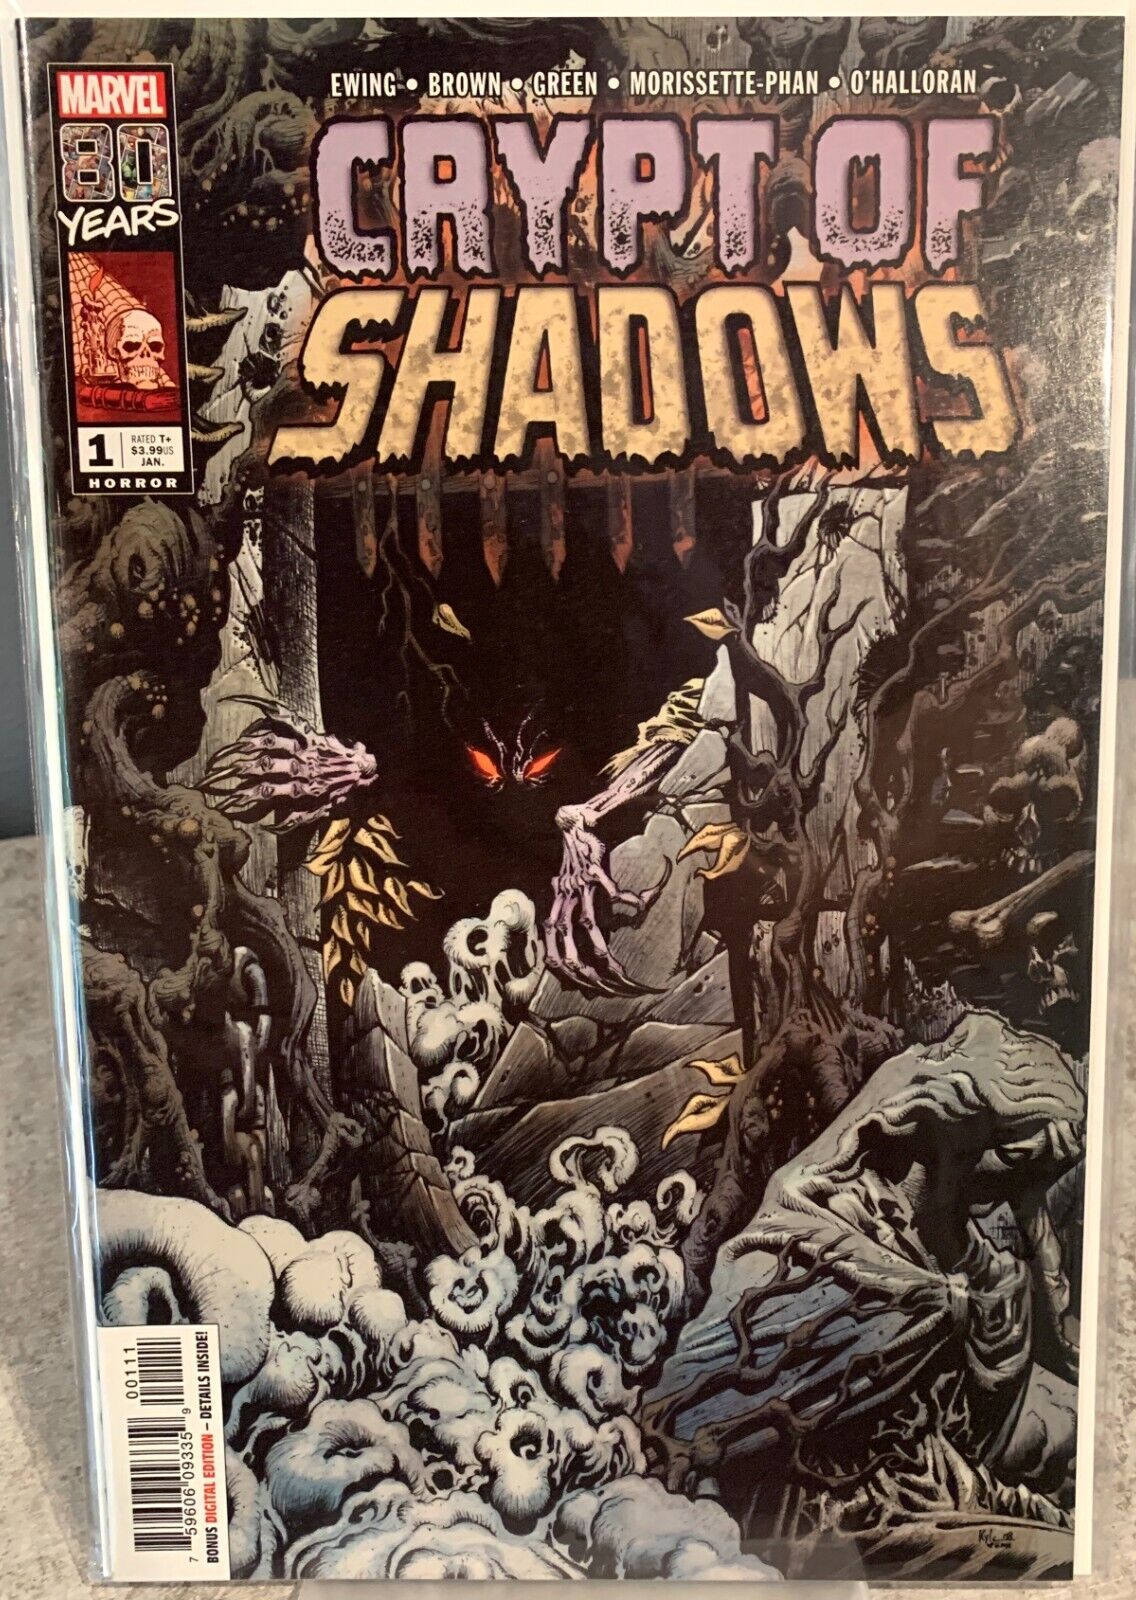 Crypt of Shadows #1 (Marvel Comics, 2019)